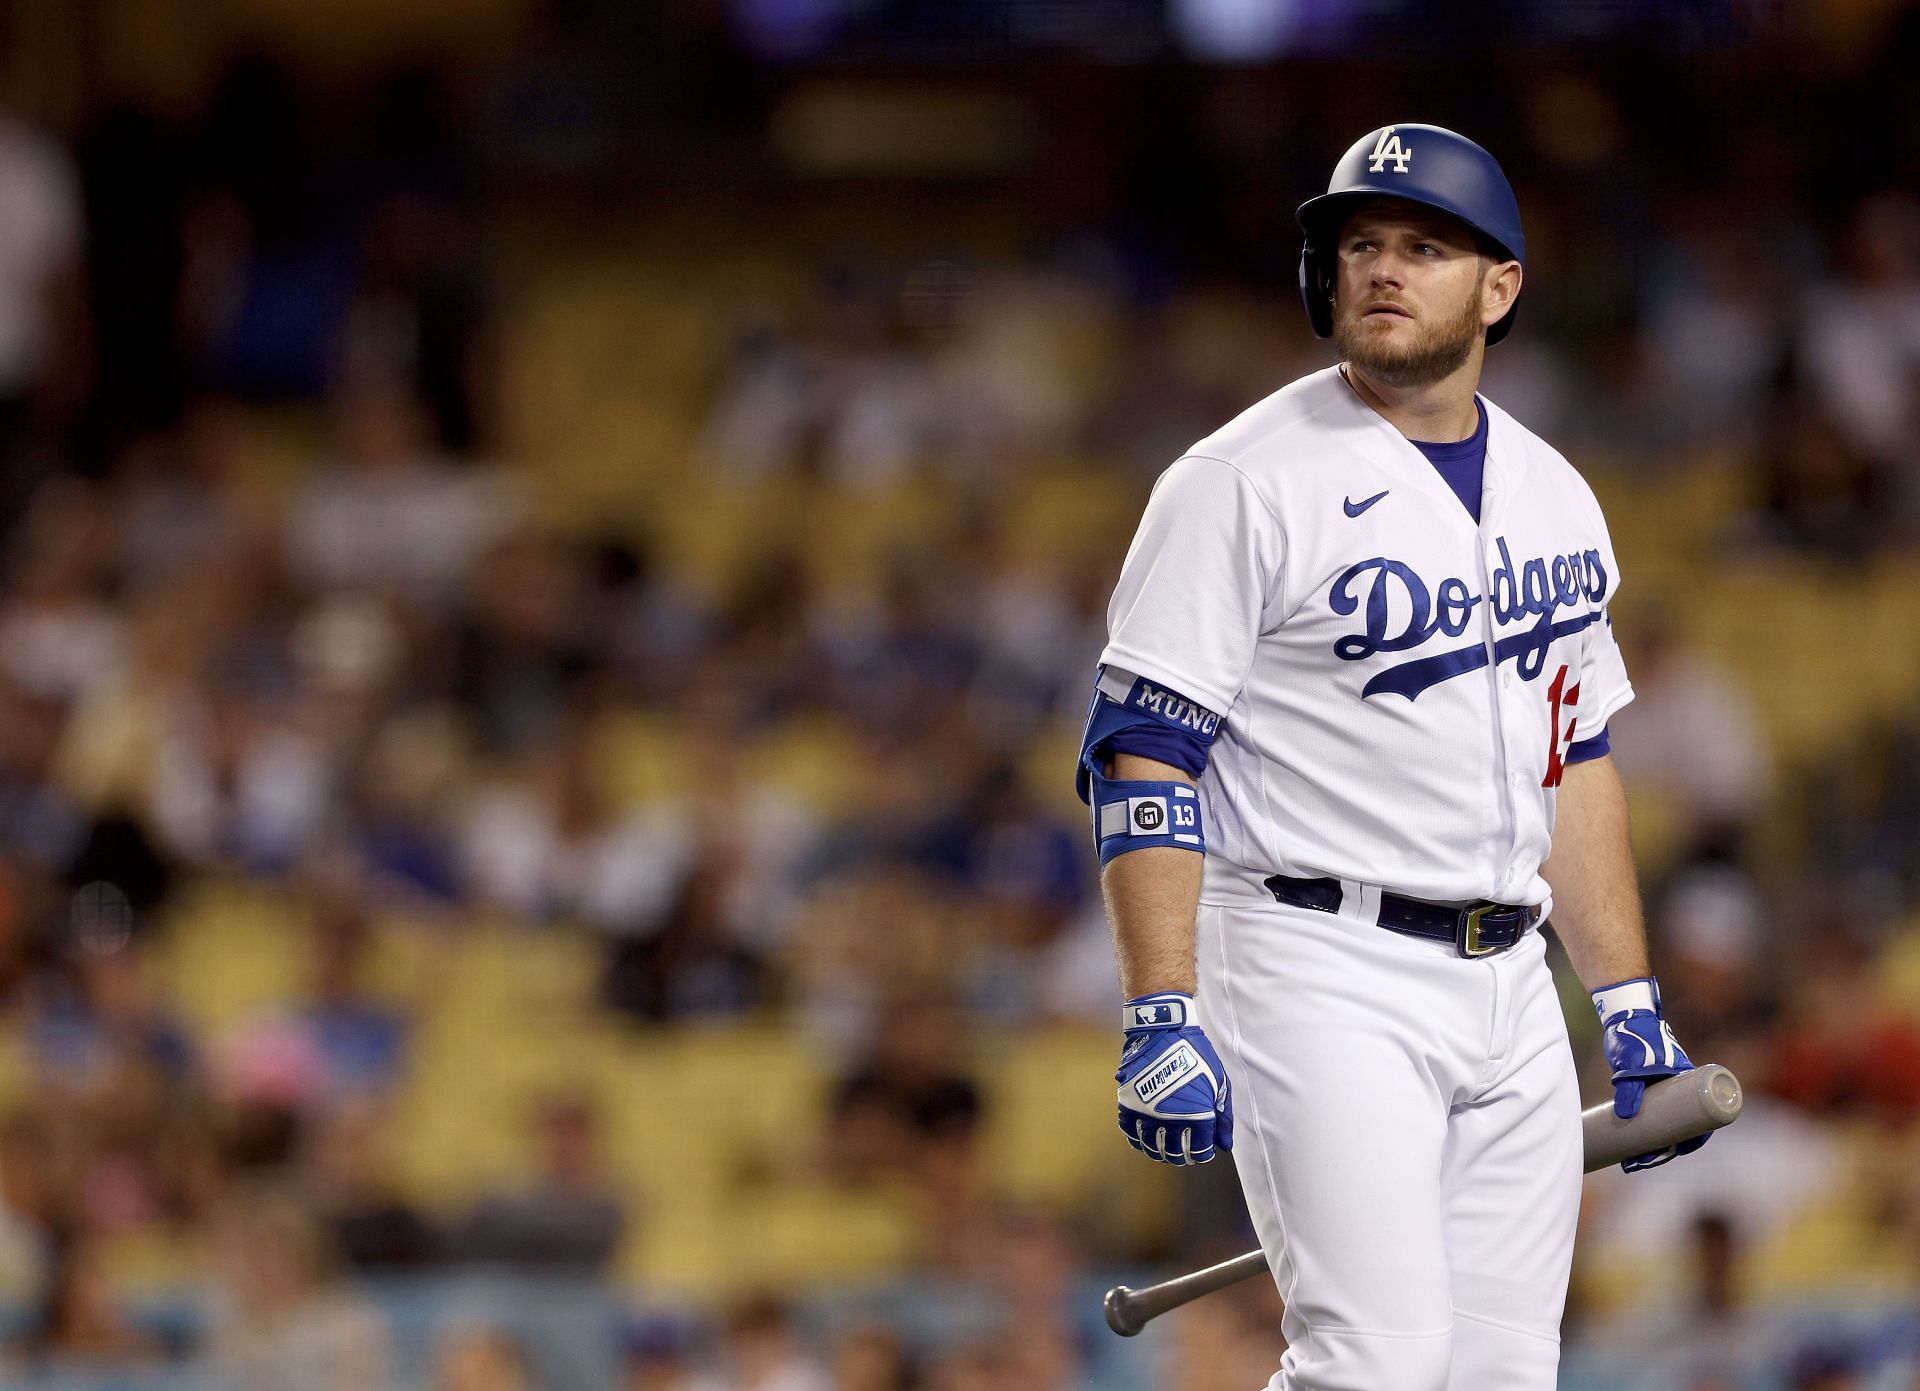 MLB Trade Rumors on X: #Dodgers top prospect Cody Bellinger is